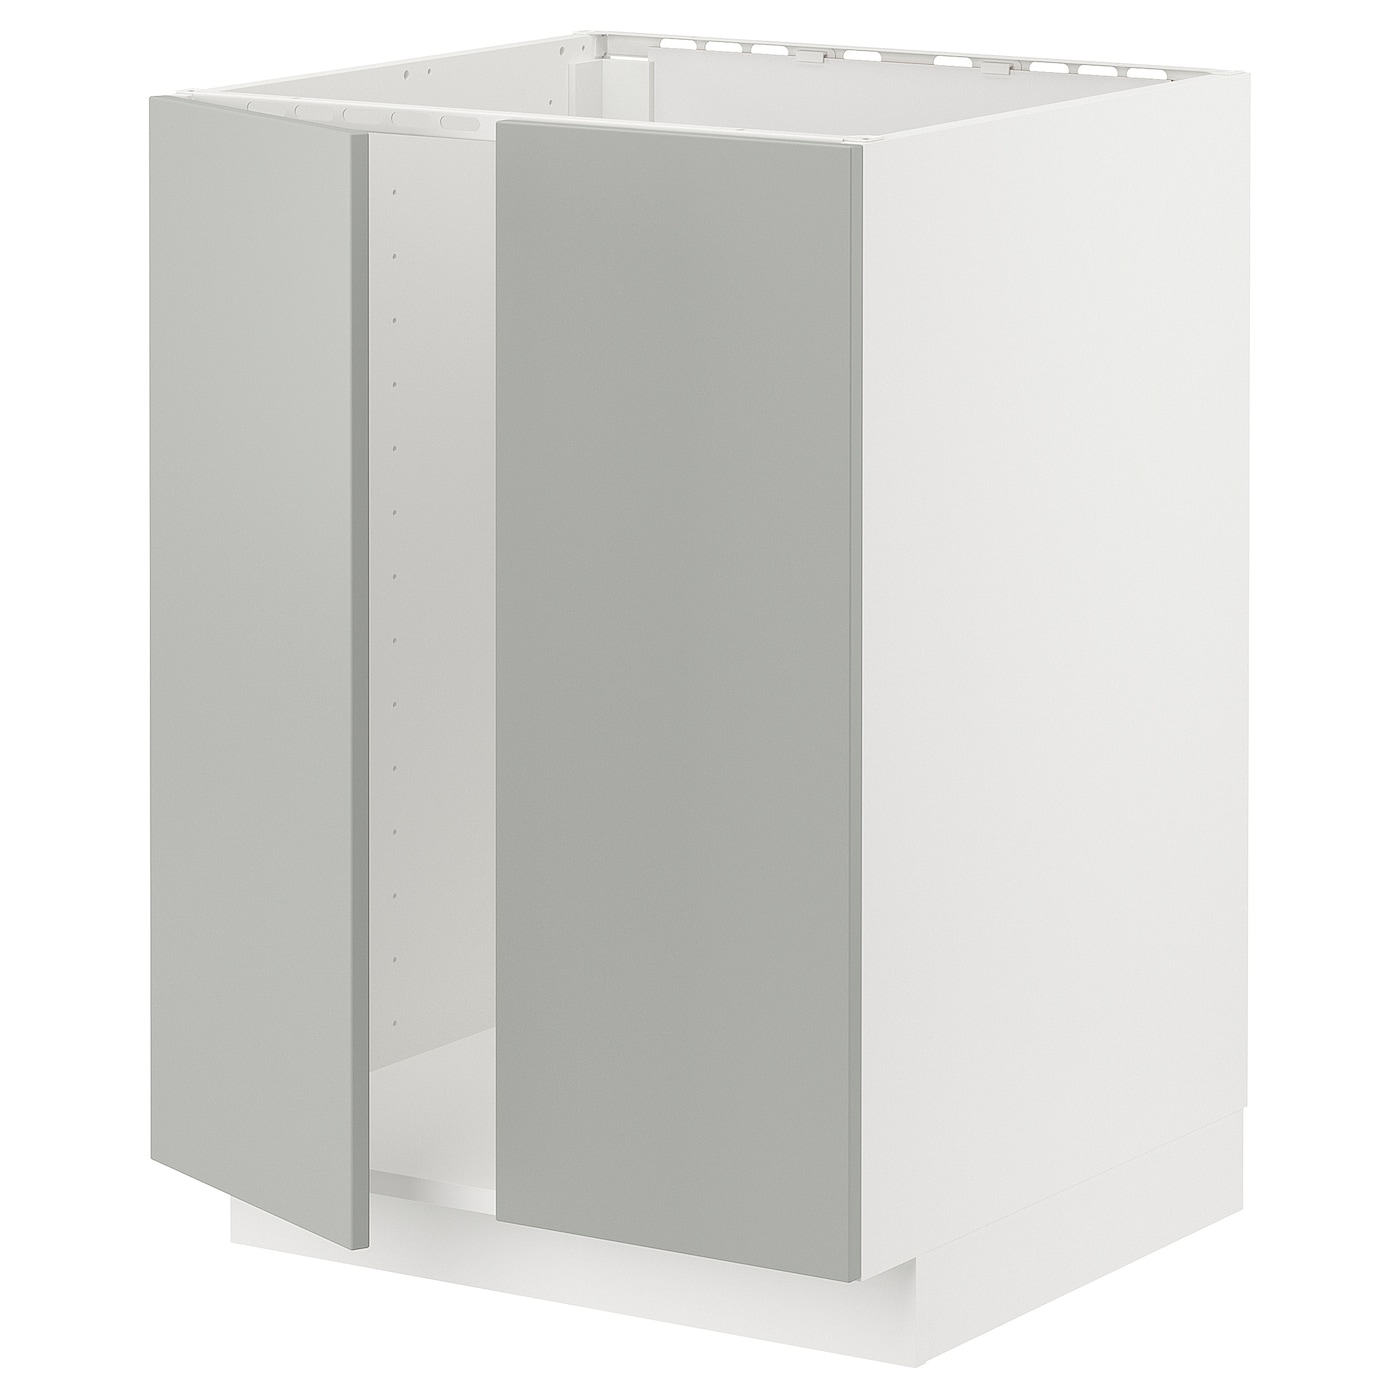 Напольный шкаф - METOD IKEA/ МЕТОД ИКЕА,  88х60 см, белый/серый